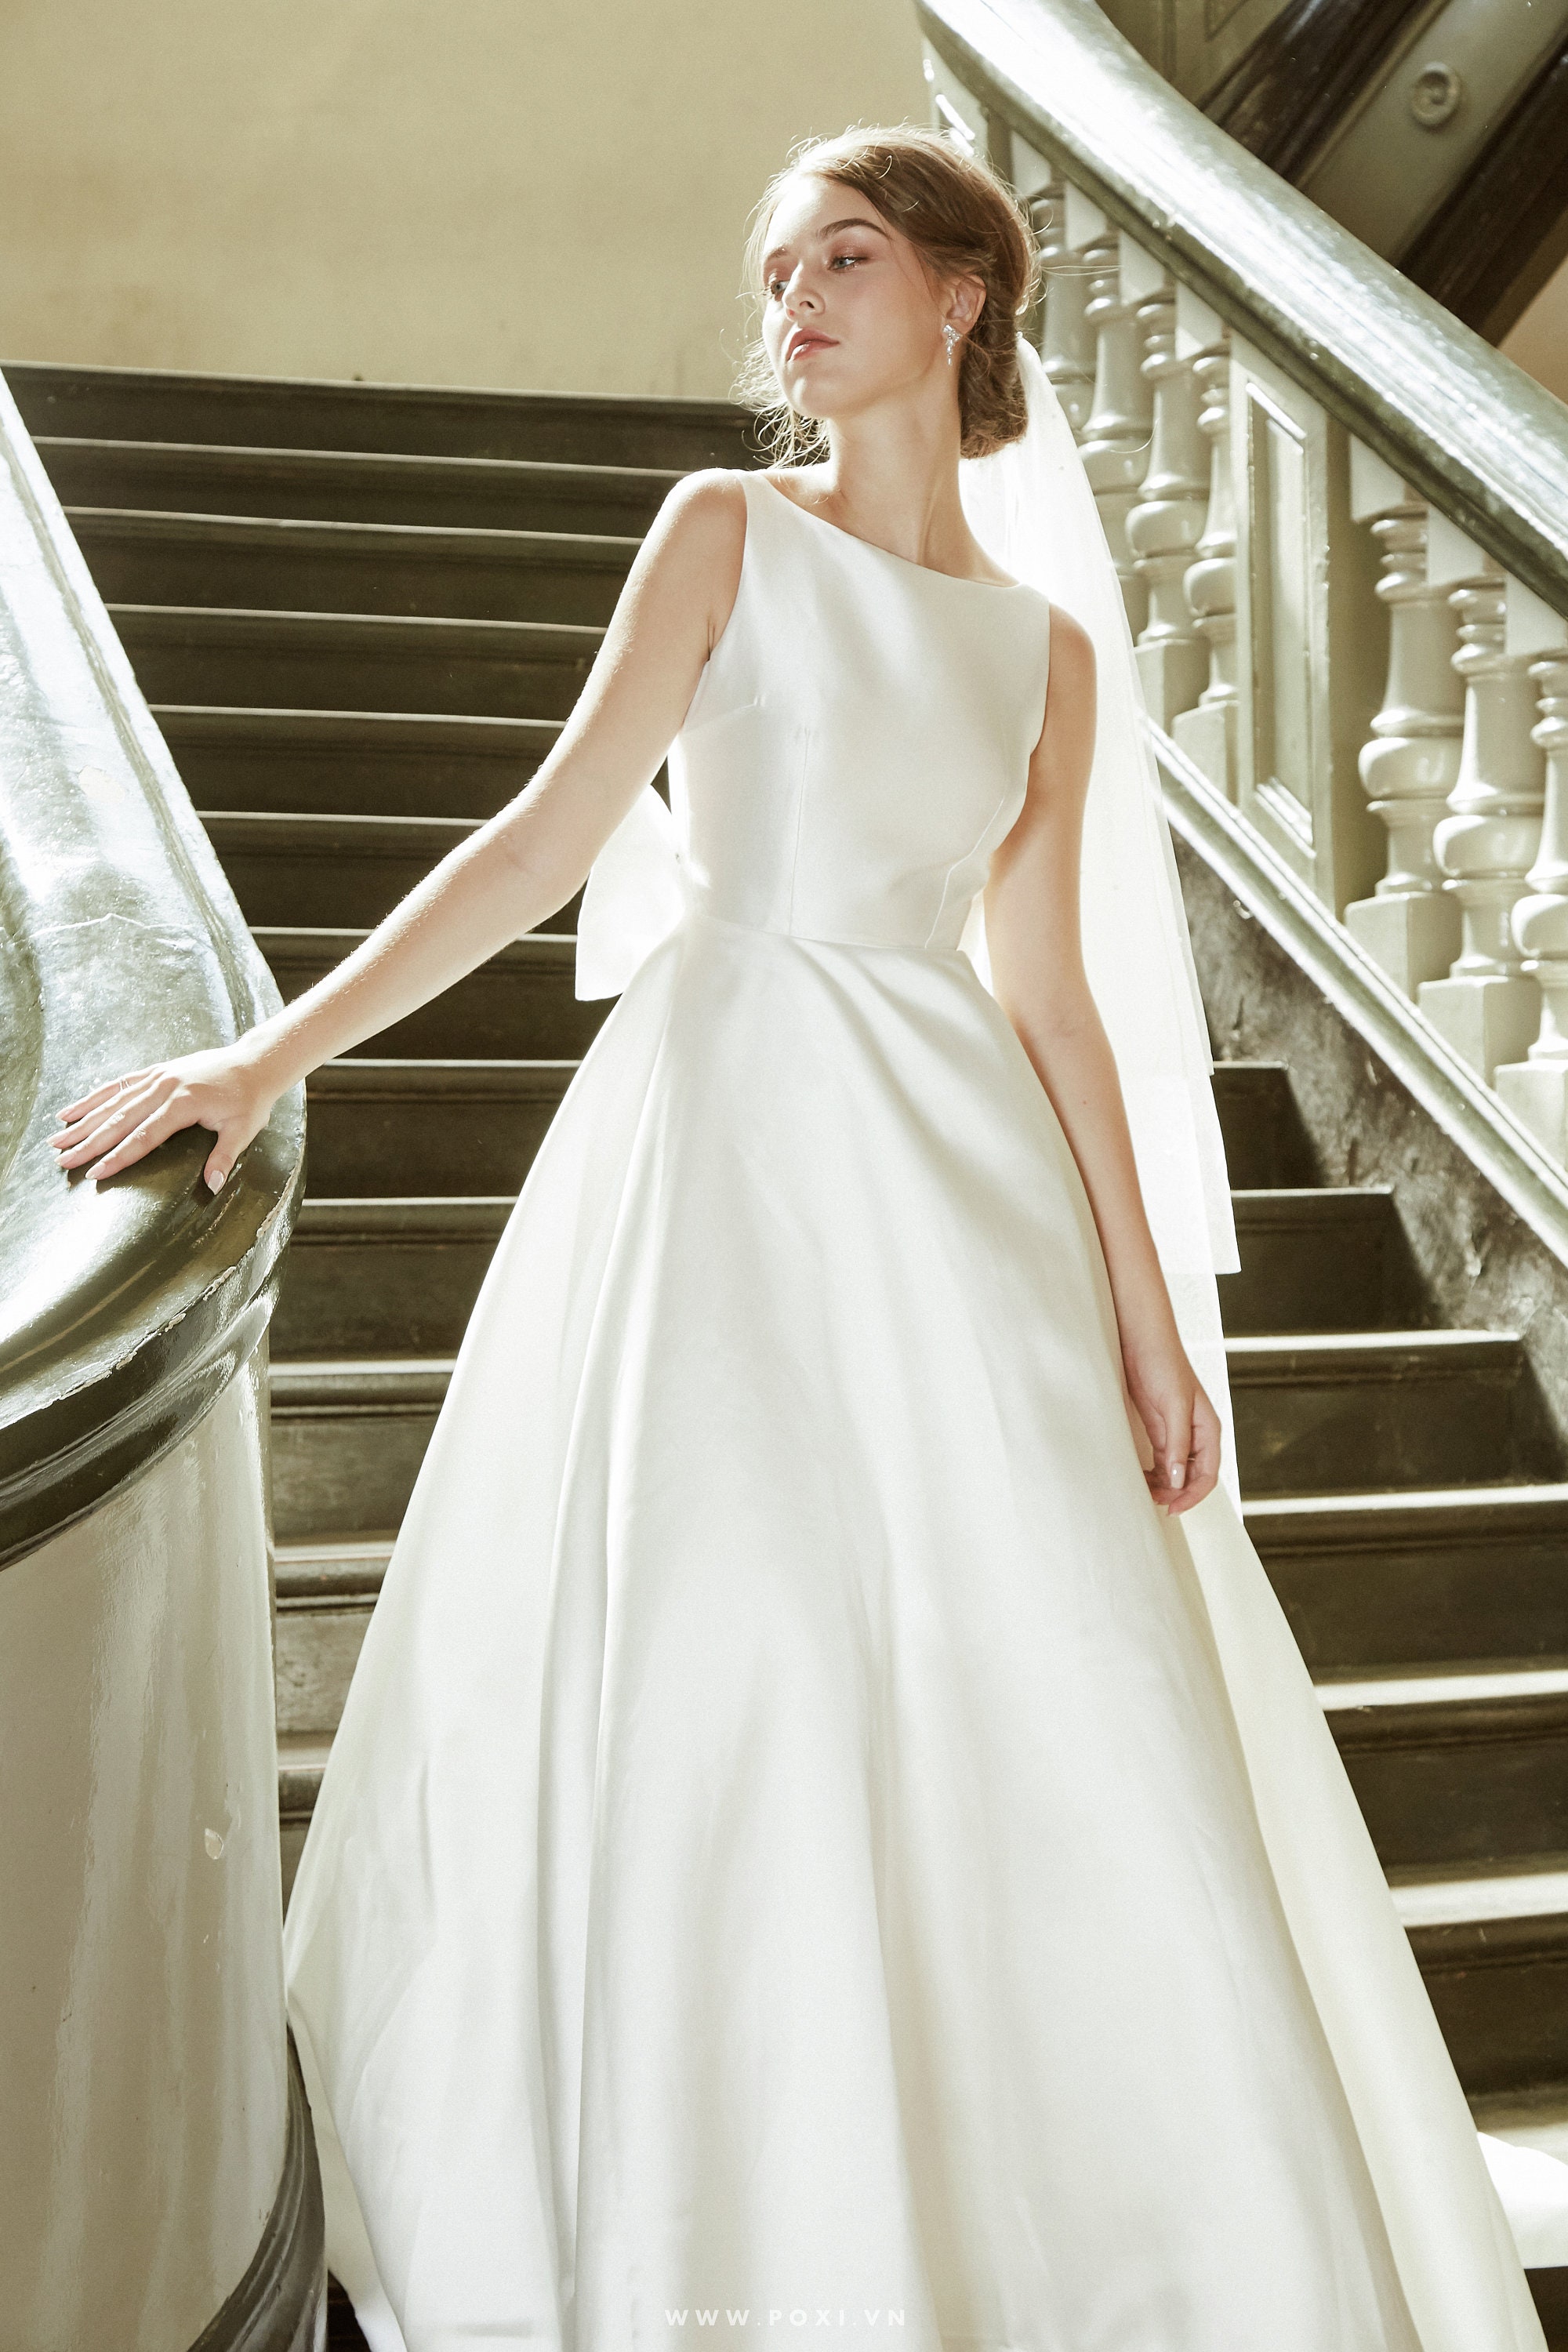 Wedding Dress With Bow Back/ Bow Wedding Dress/ White Dress | Etsy